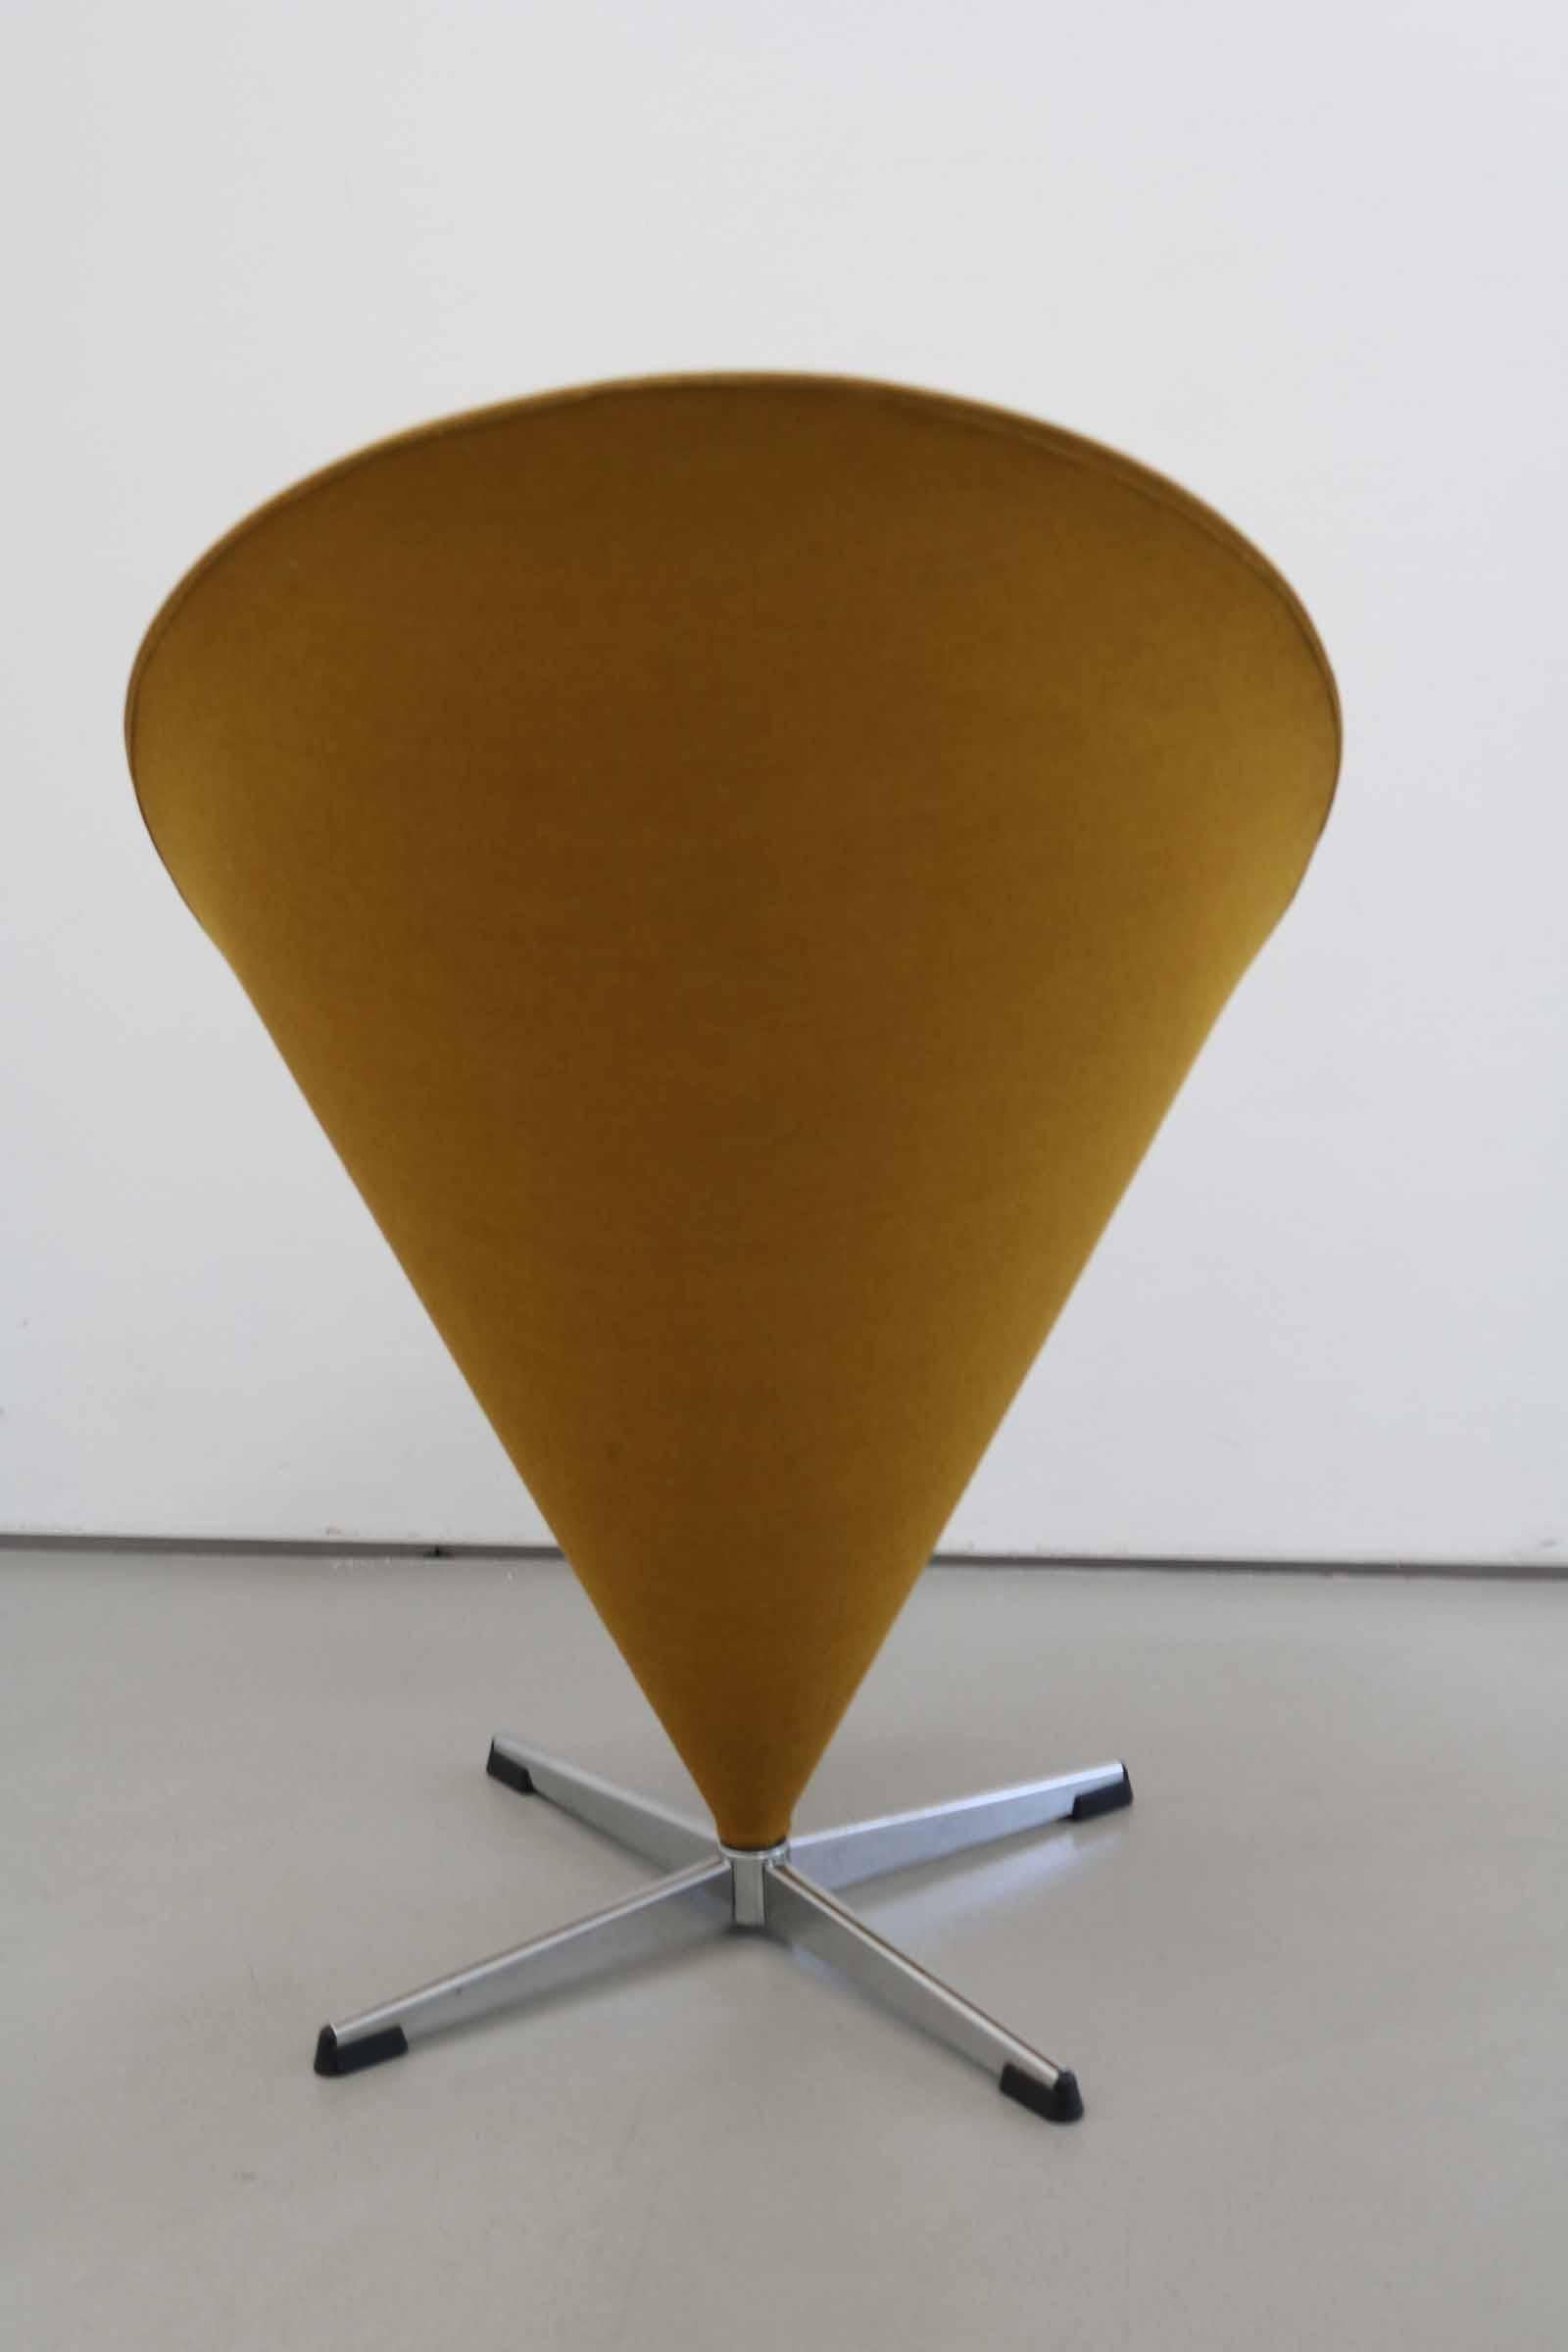 Danish Verner Panton Mustard Yellow Cone Chair in Original Fabric, Denmark, 1960s For Sale